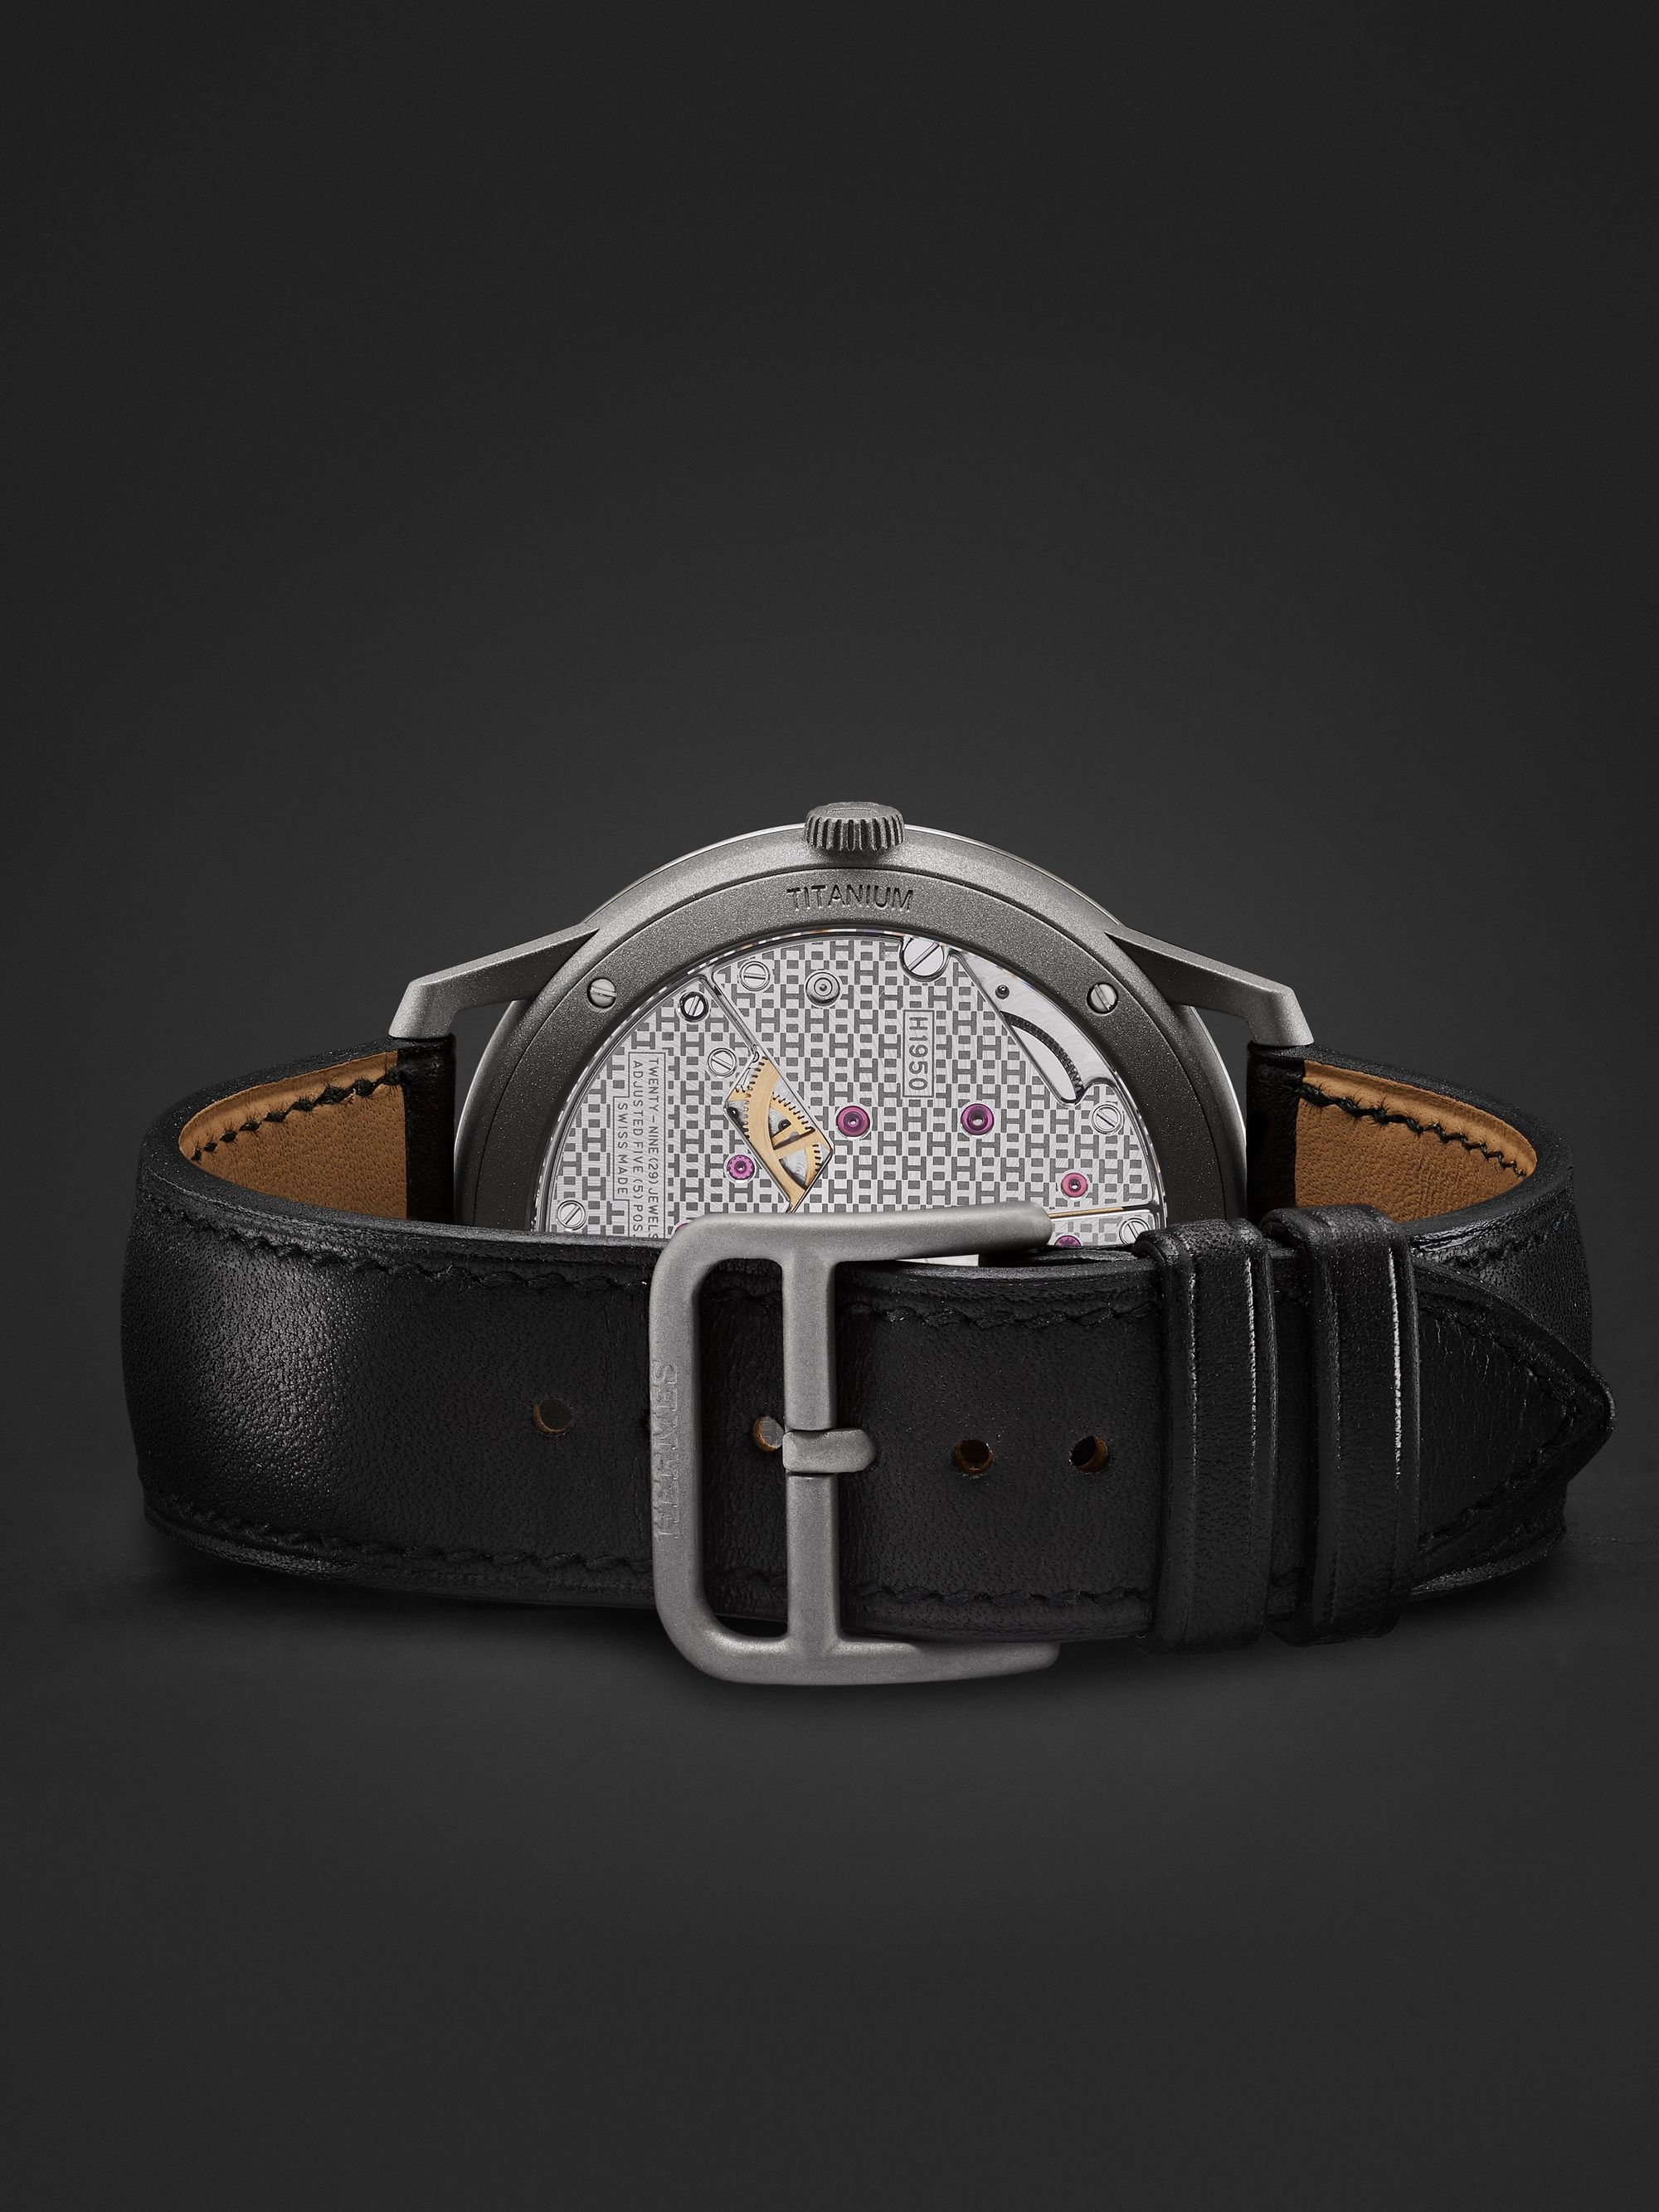 HERMÈS TIMEPIECES Slim d’Hermès Titane 39.5mm Titanium and Alligator Watch, Ref. No. 052845WW00